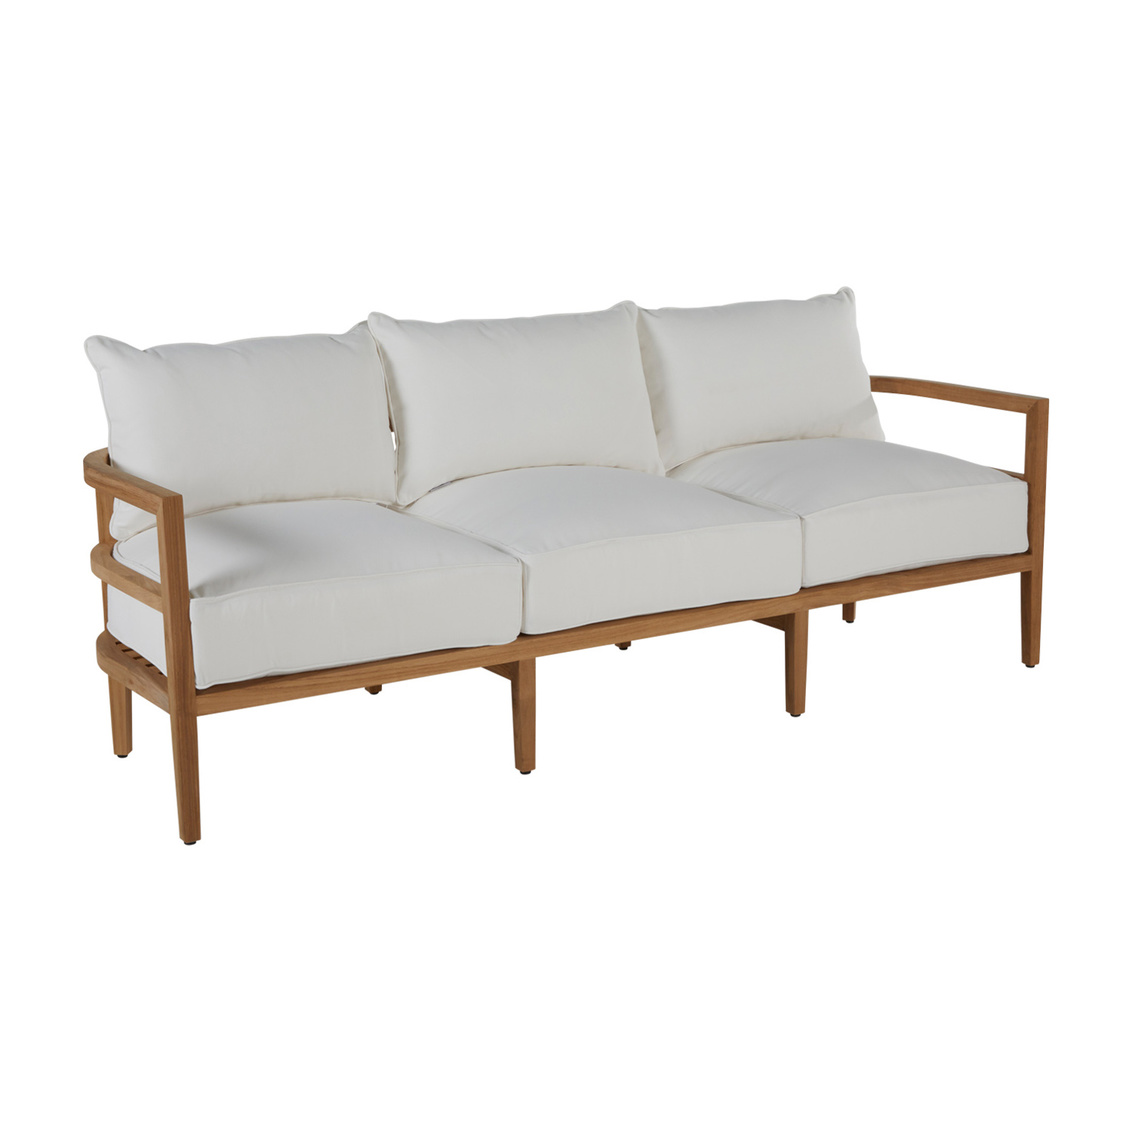 santa barbara teak sofa in natural teak – frame only product image